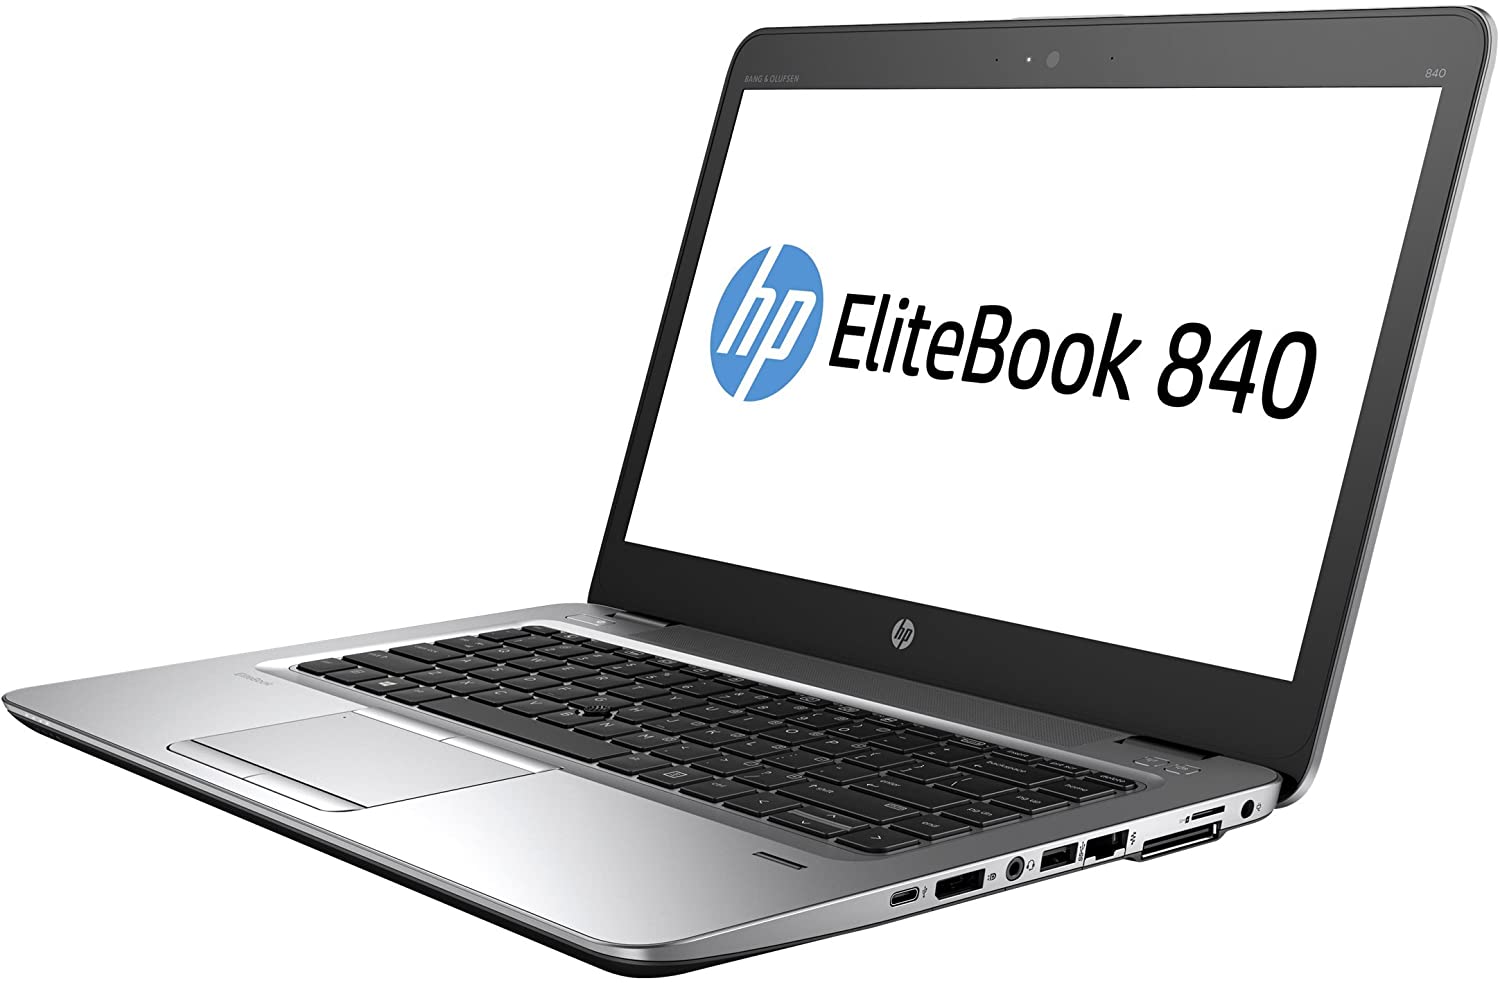 Portátil Ultrabook HP Elitebook 840 G3 GRADO B (Intel Core i5 6300U 2.4Ghz/8GB/240SSD/14HD/NO-DVD/W10P) Preinstalado